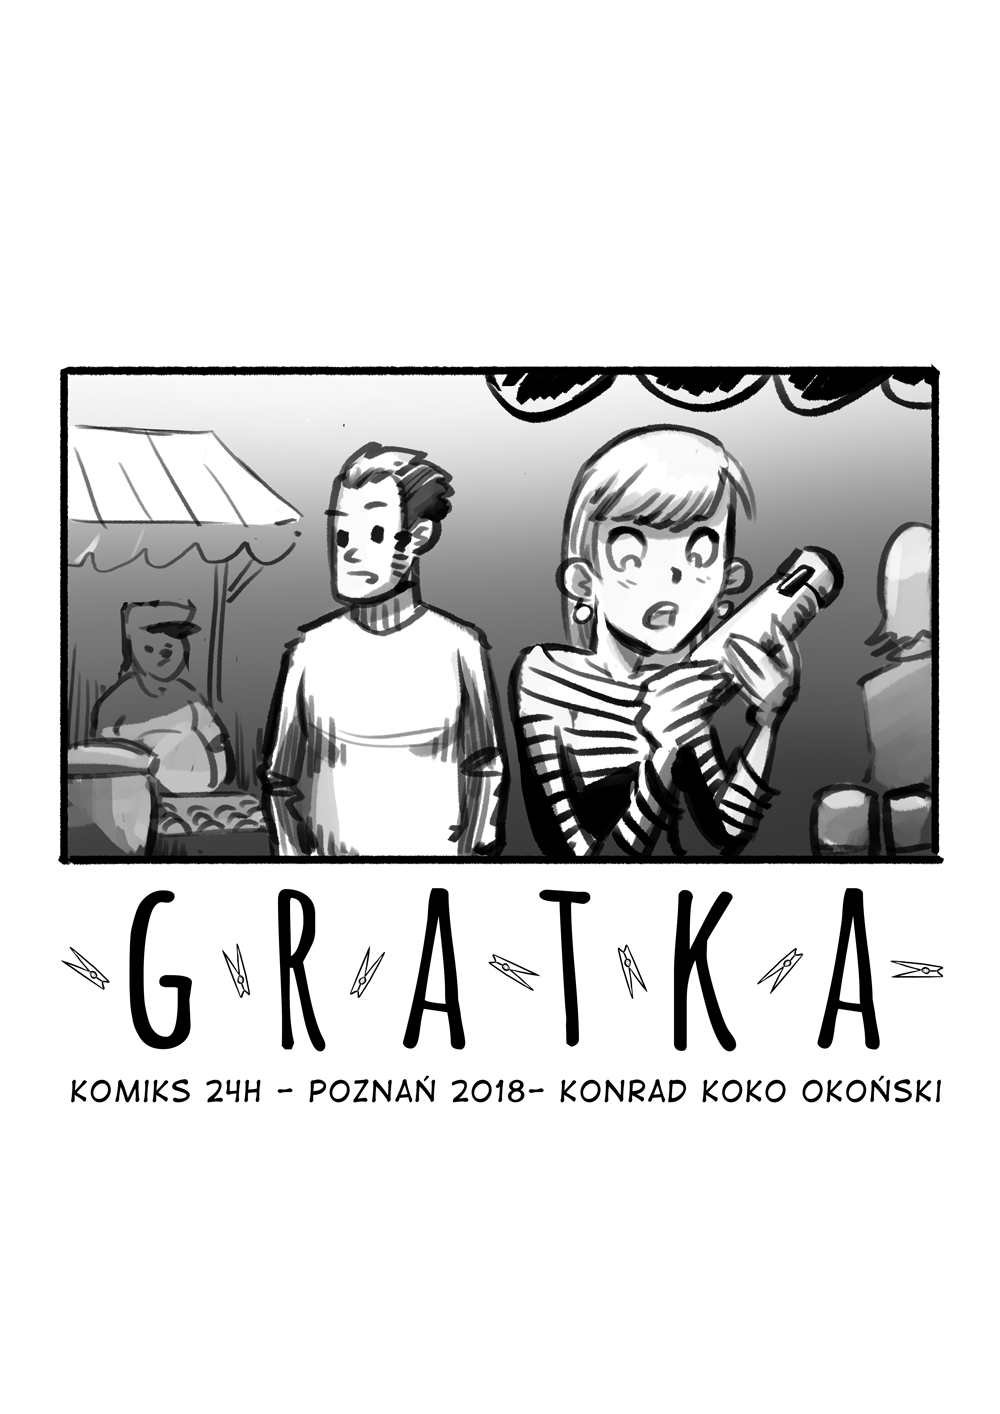 Gratka – komiks 24